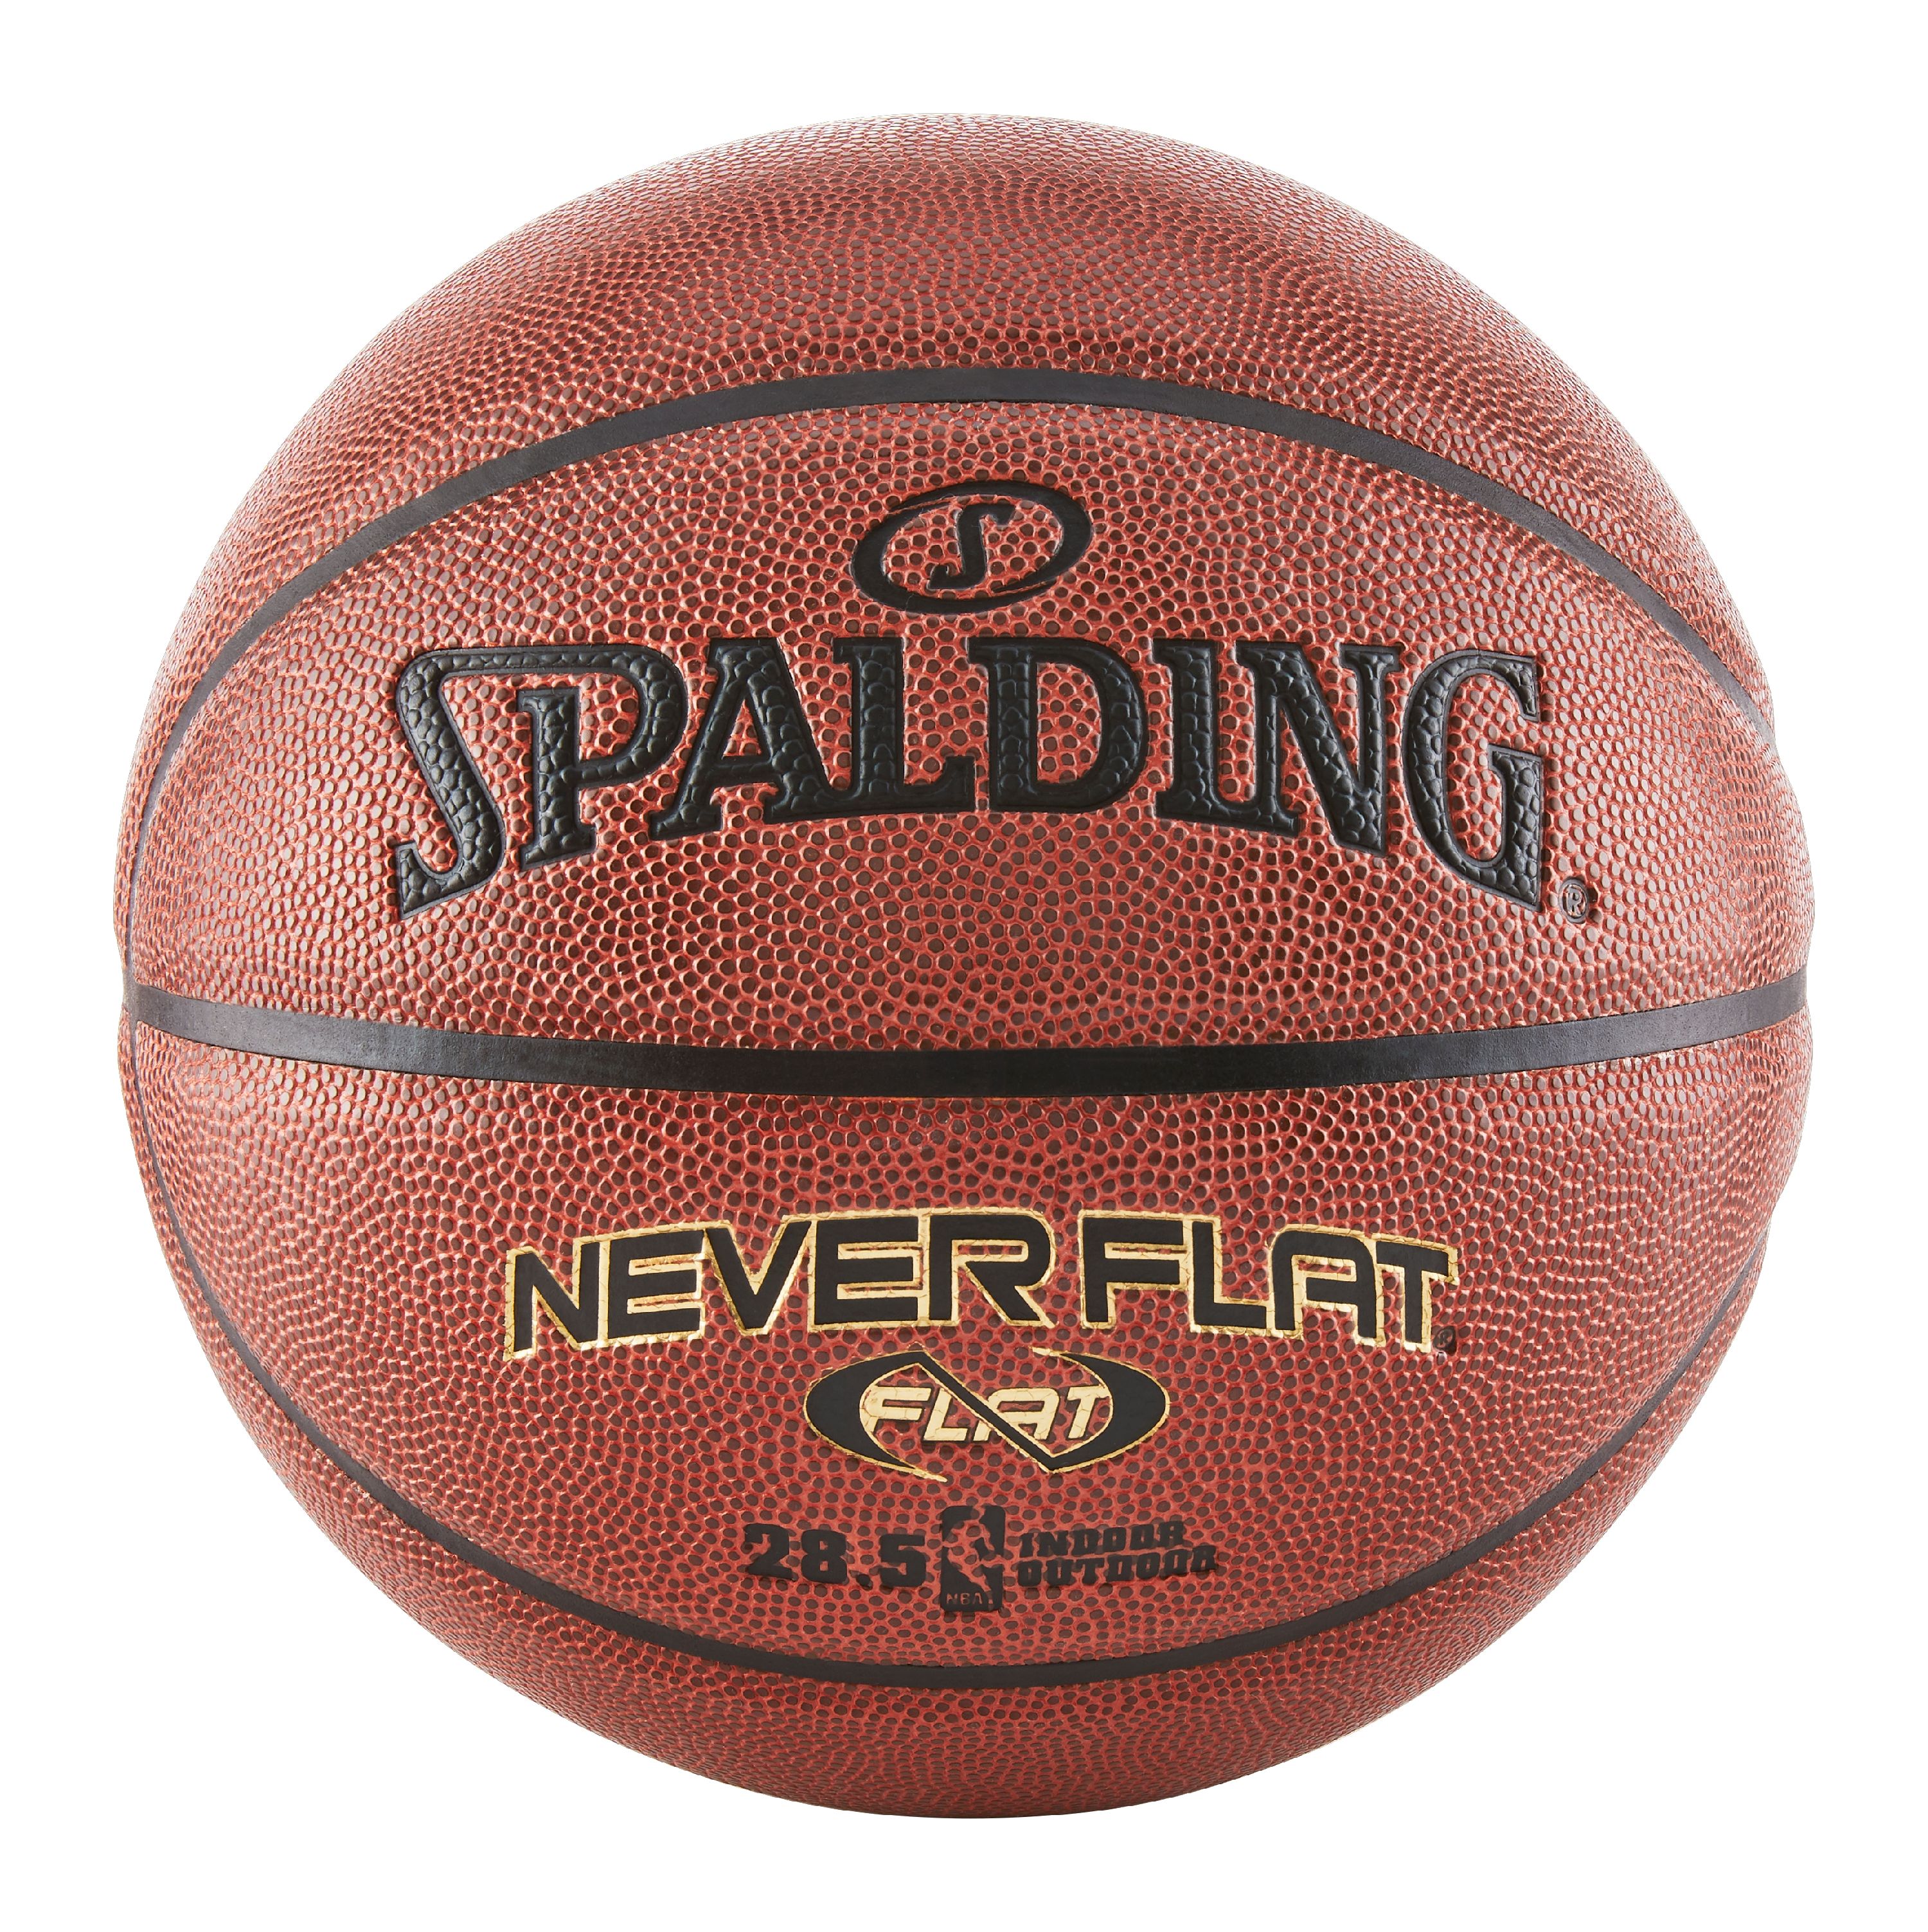 Spalding NBA Neverflat Premium Basketball - image 1 of 6